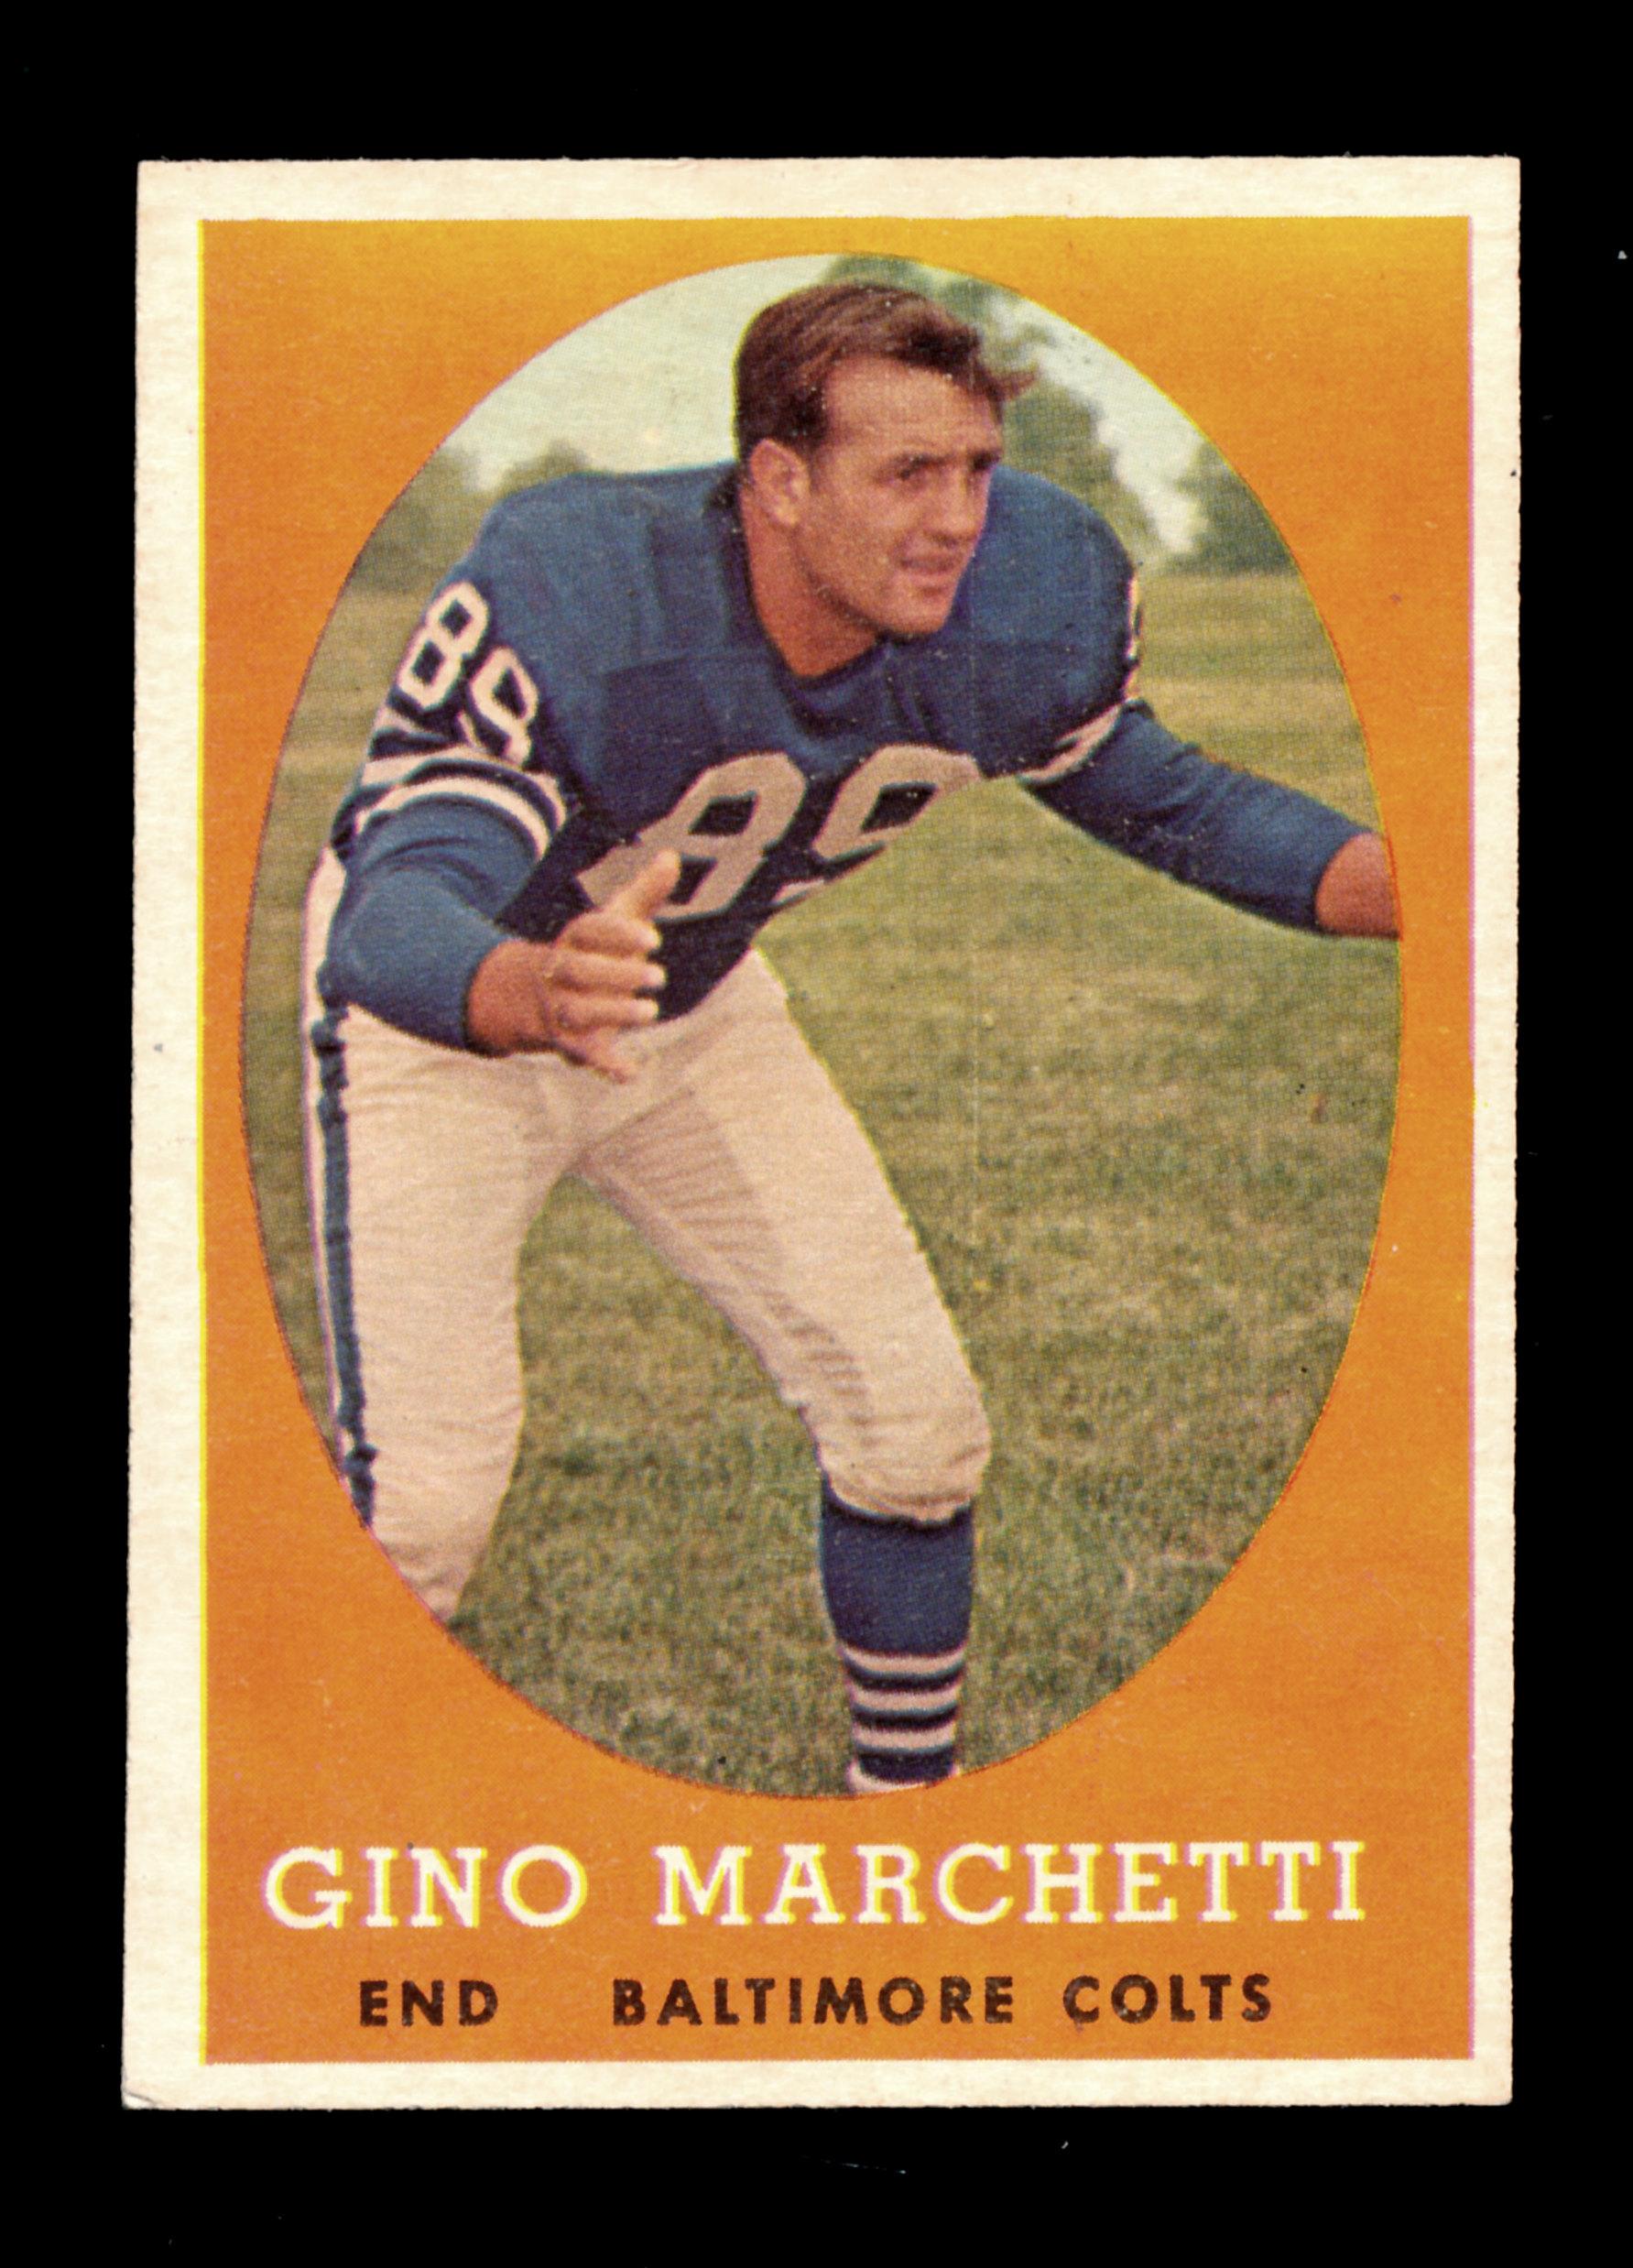 1958 Topps Football Card #16 Hall of Famer Gino Machete Baltimore Colts. EX